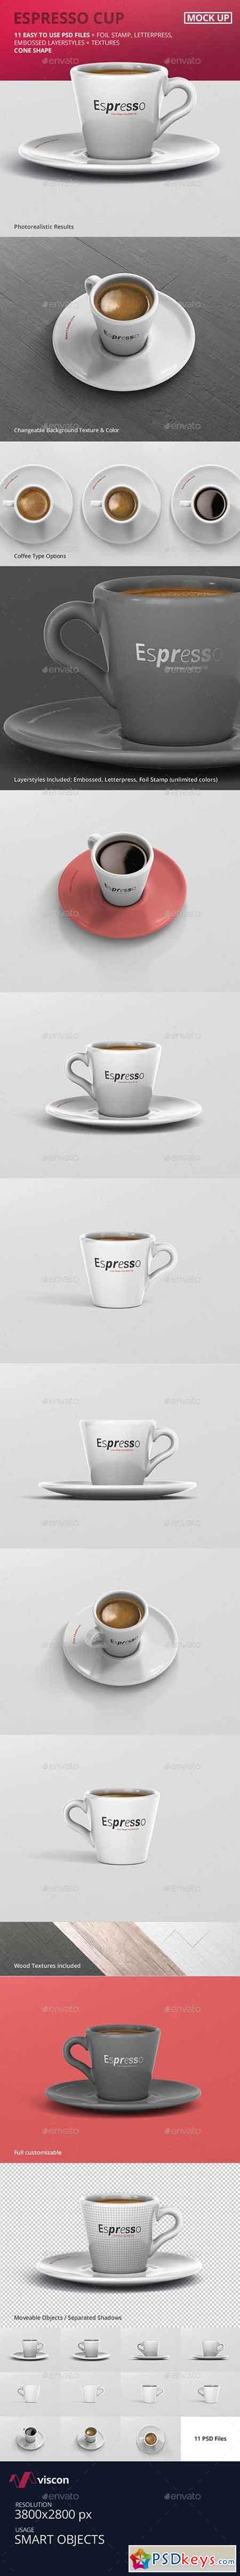 Espresso Cup Mockup - Cone Shape 20029107